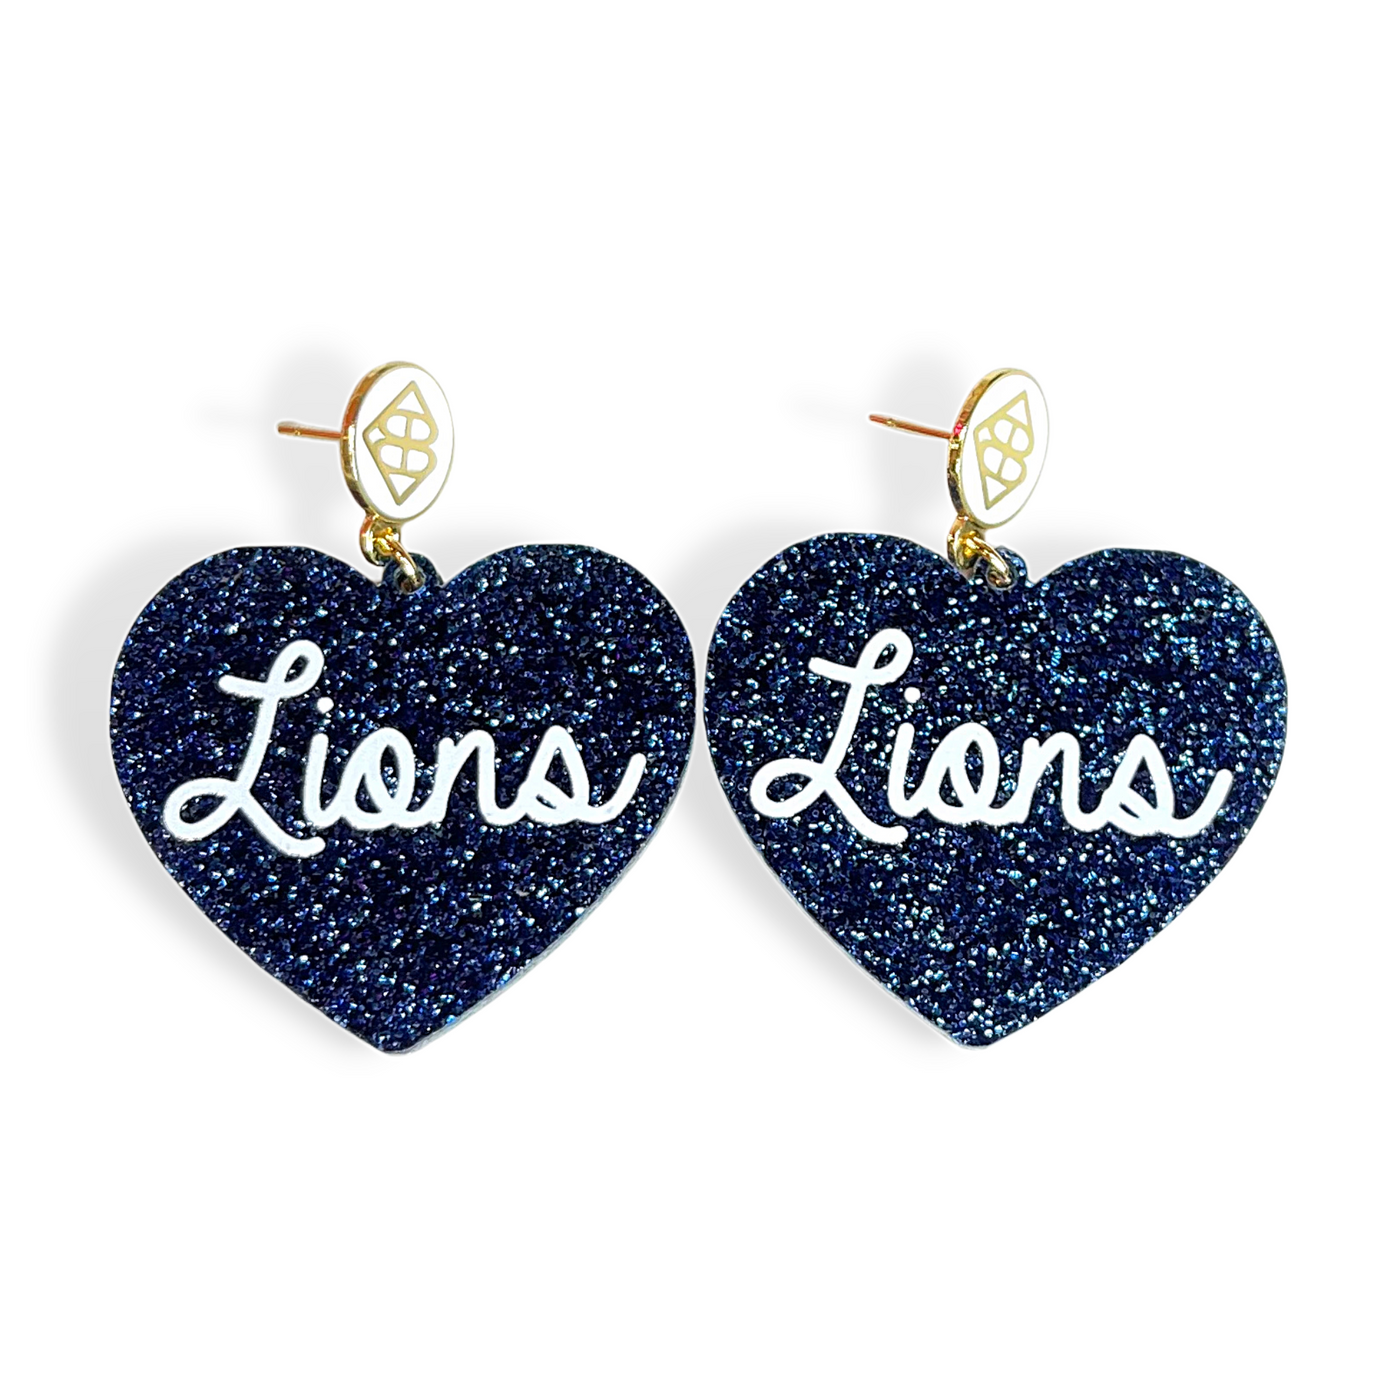 Navy Glitter Heart Earrings with White Lions Script